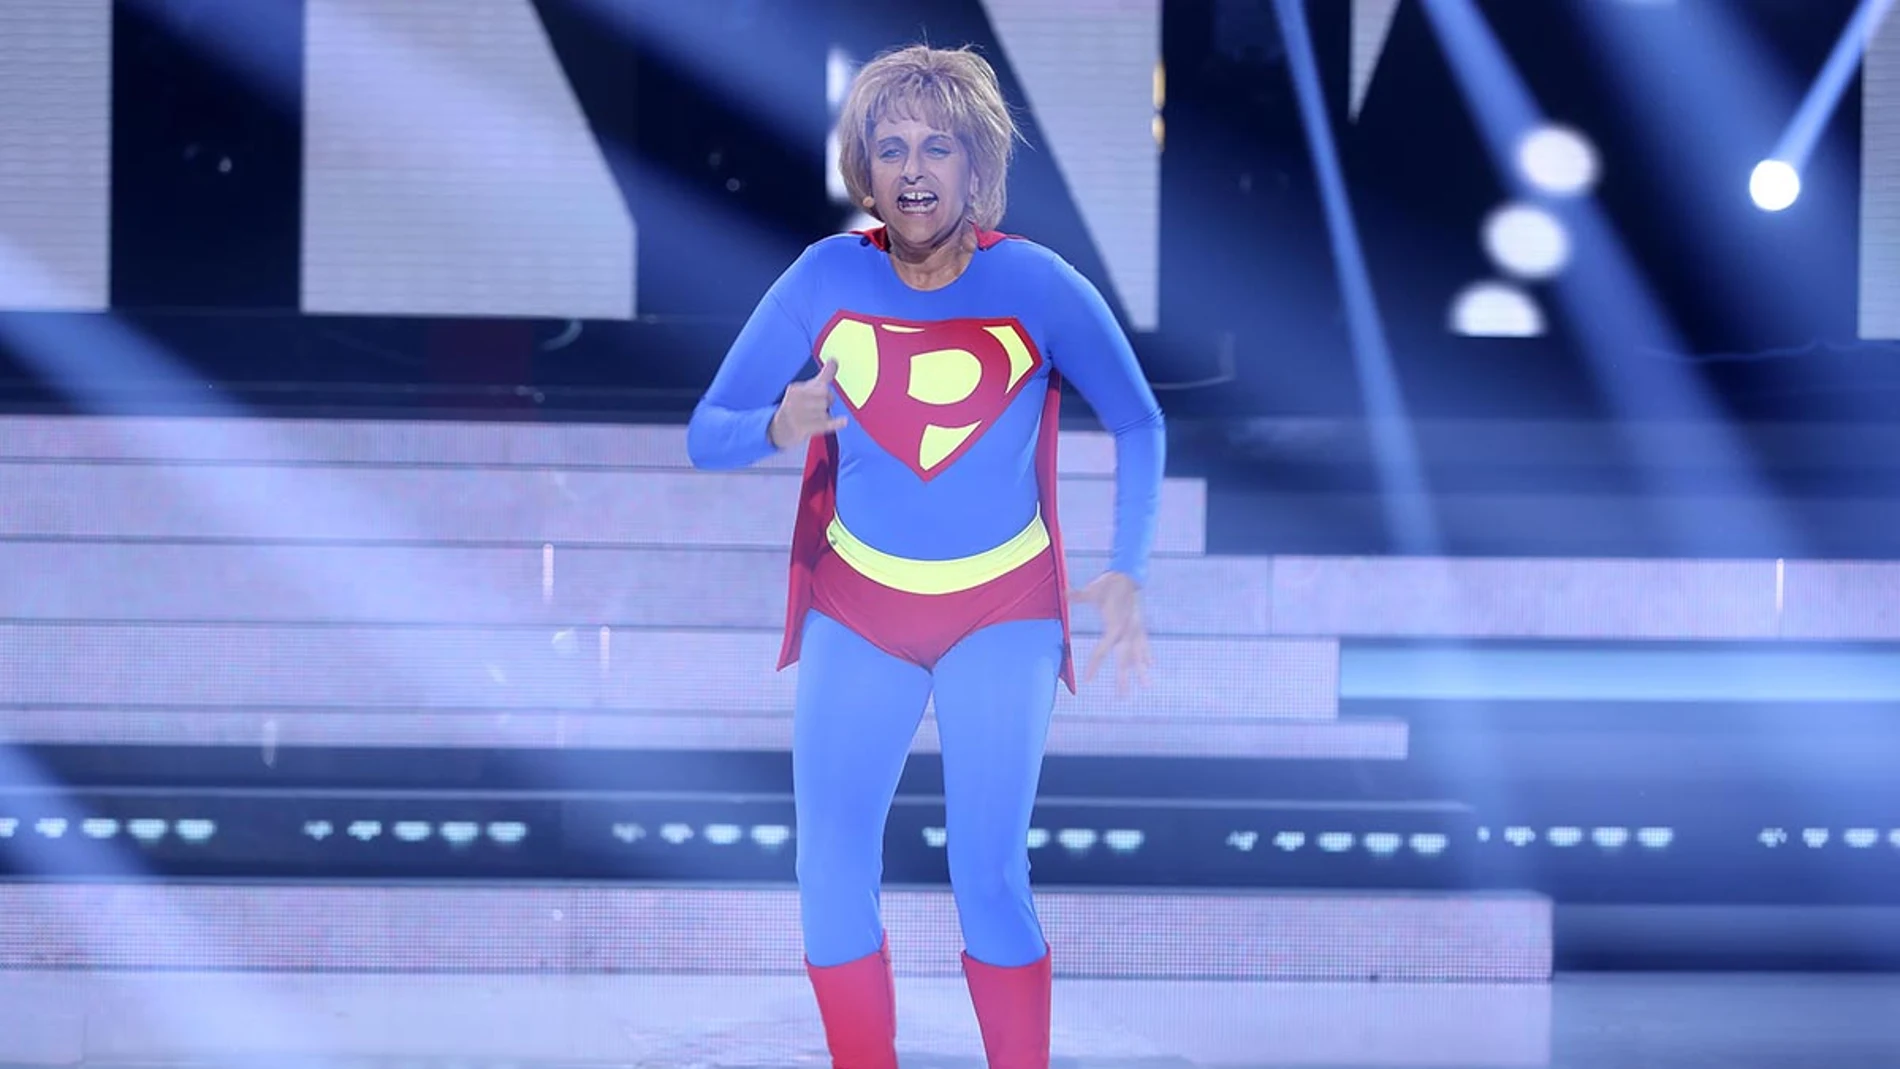 Yolanda Ramos se enfunda un traje se superhéroe para interpretar “Ça plane pour moi”, de Plastic Bertrand